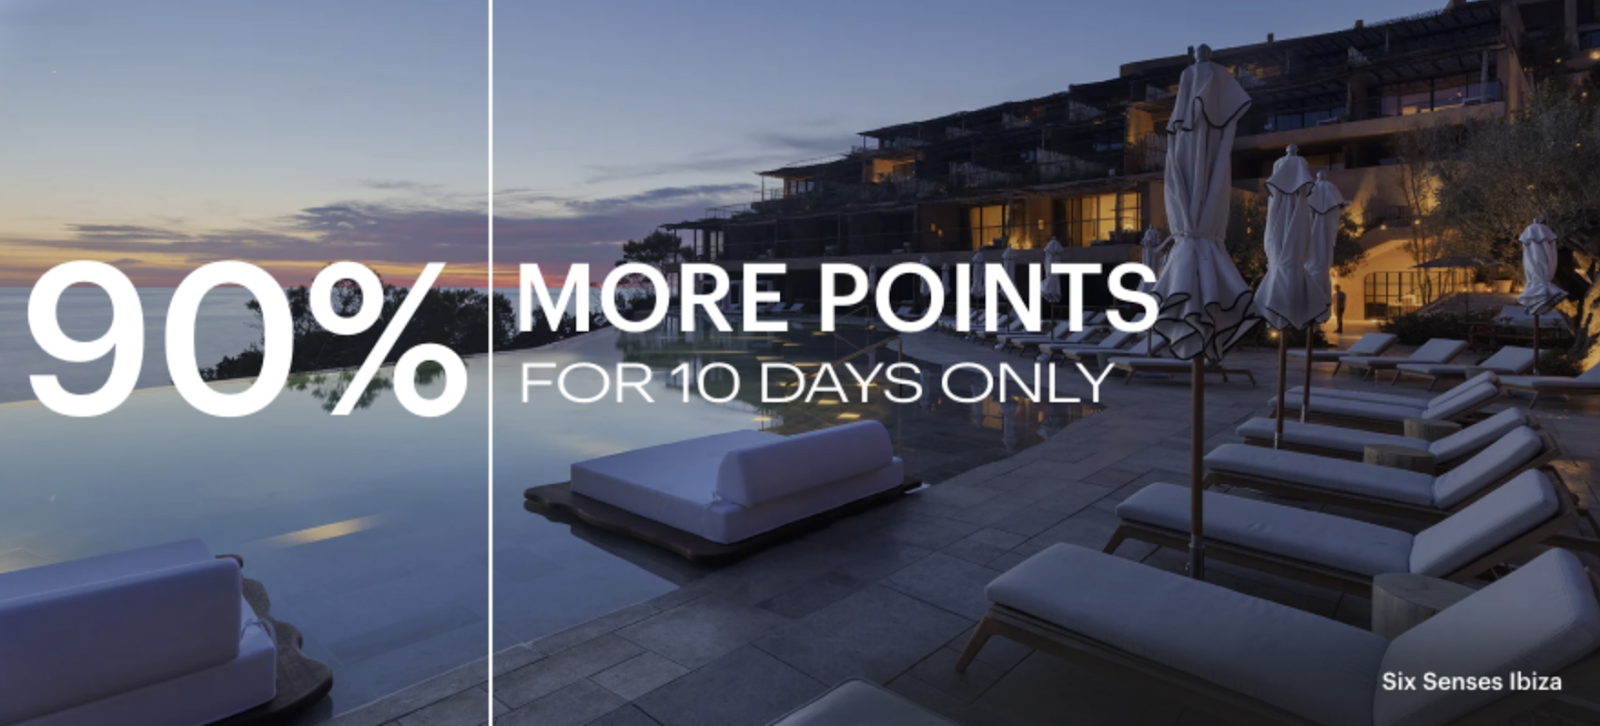 Buy IHG Points With a 90% Bonus Until August 7